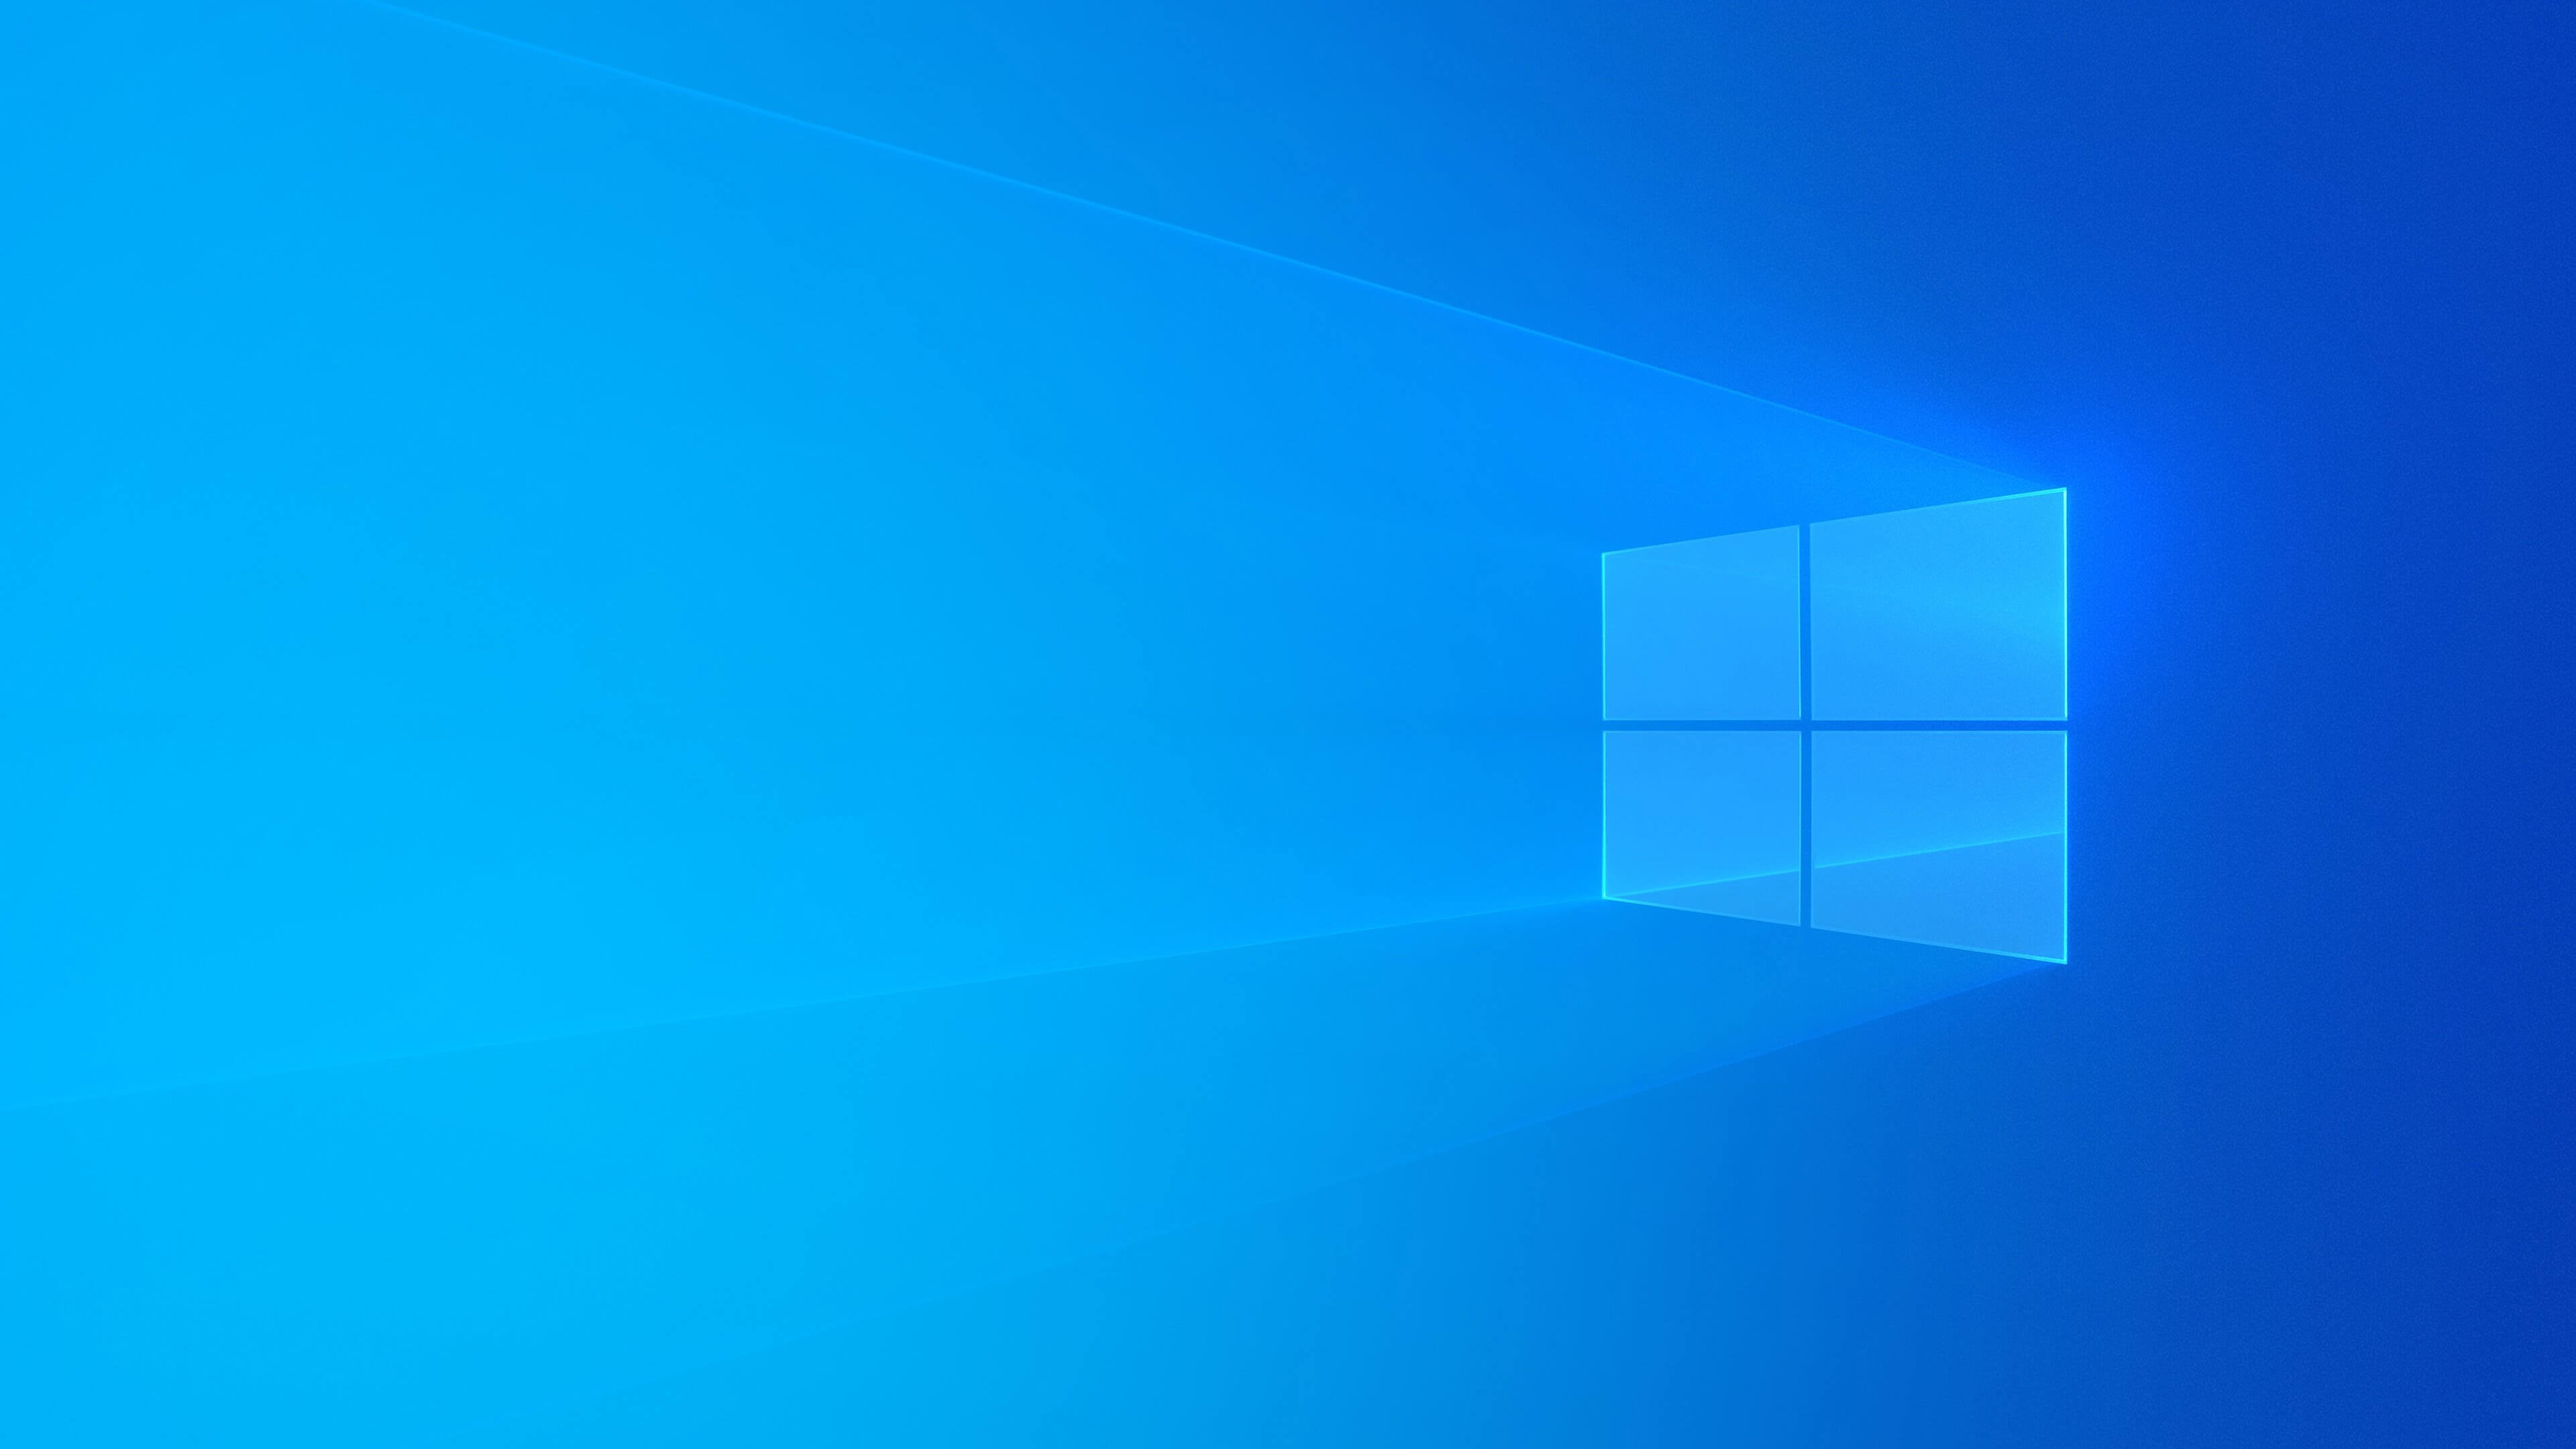 Windows-10-blue-background-light-abstract-design_3840x2160.jpg